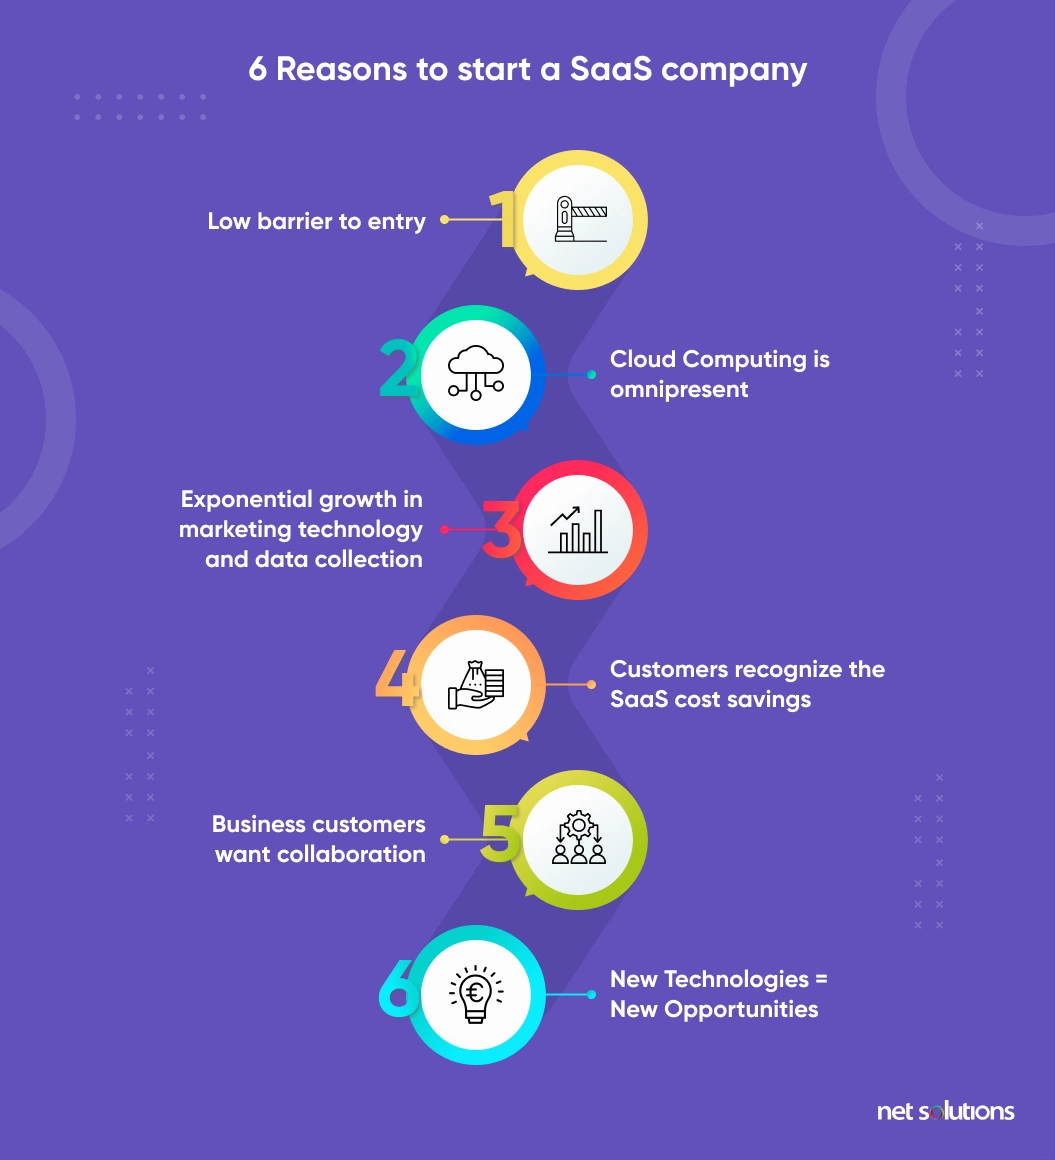 6 reasons to consider a SaaS company